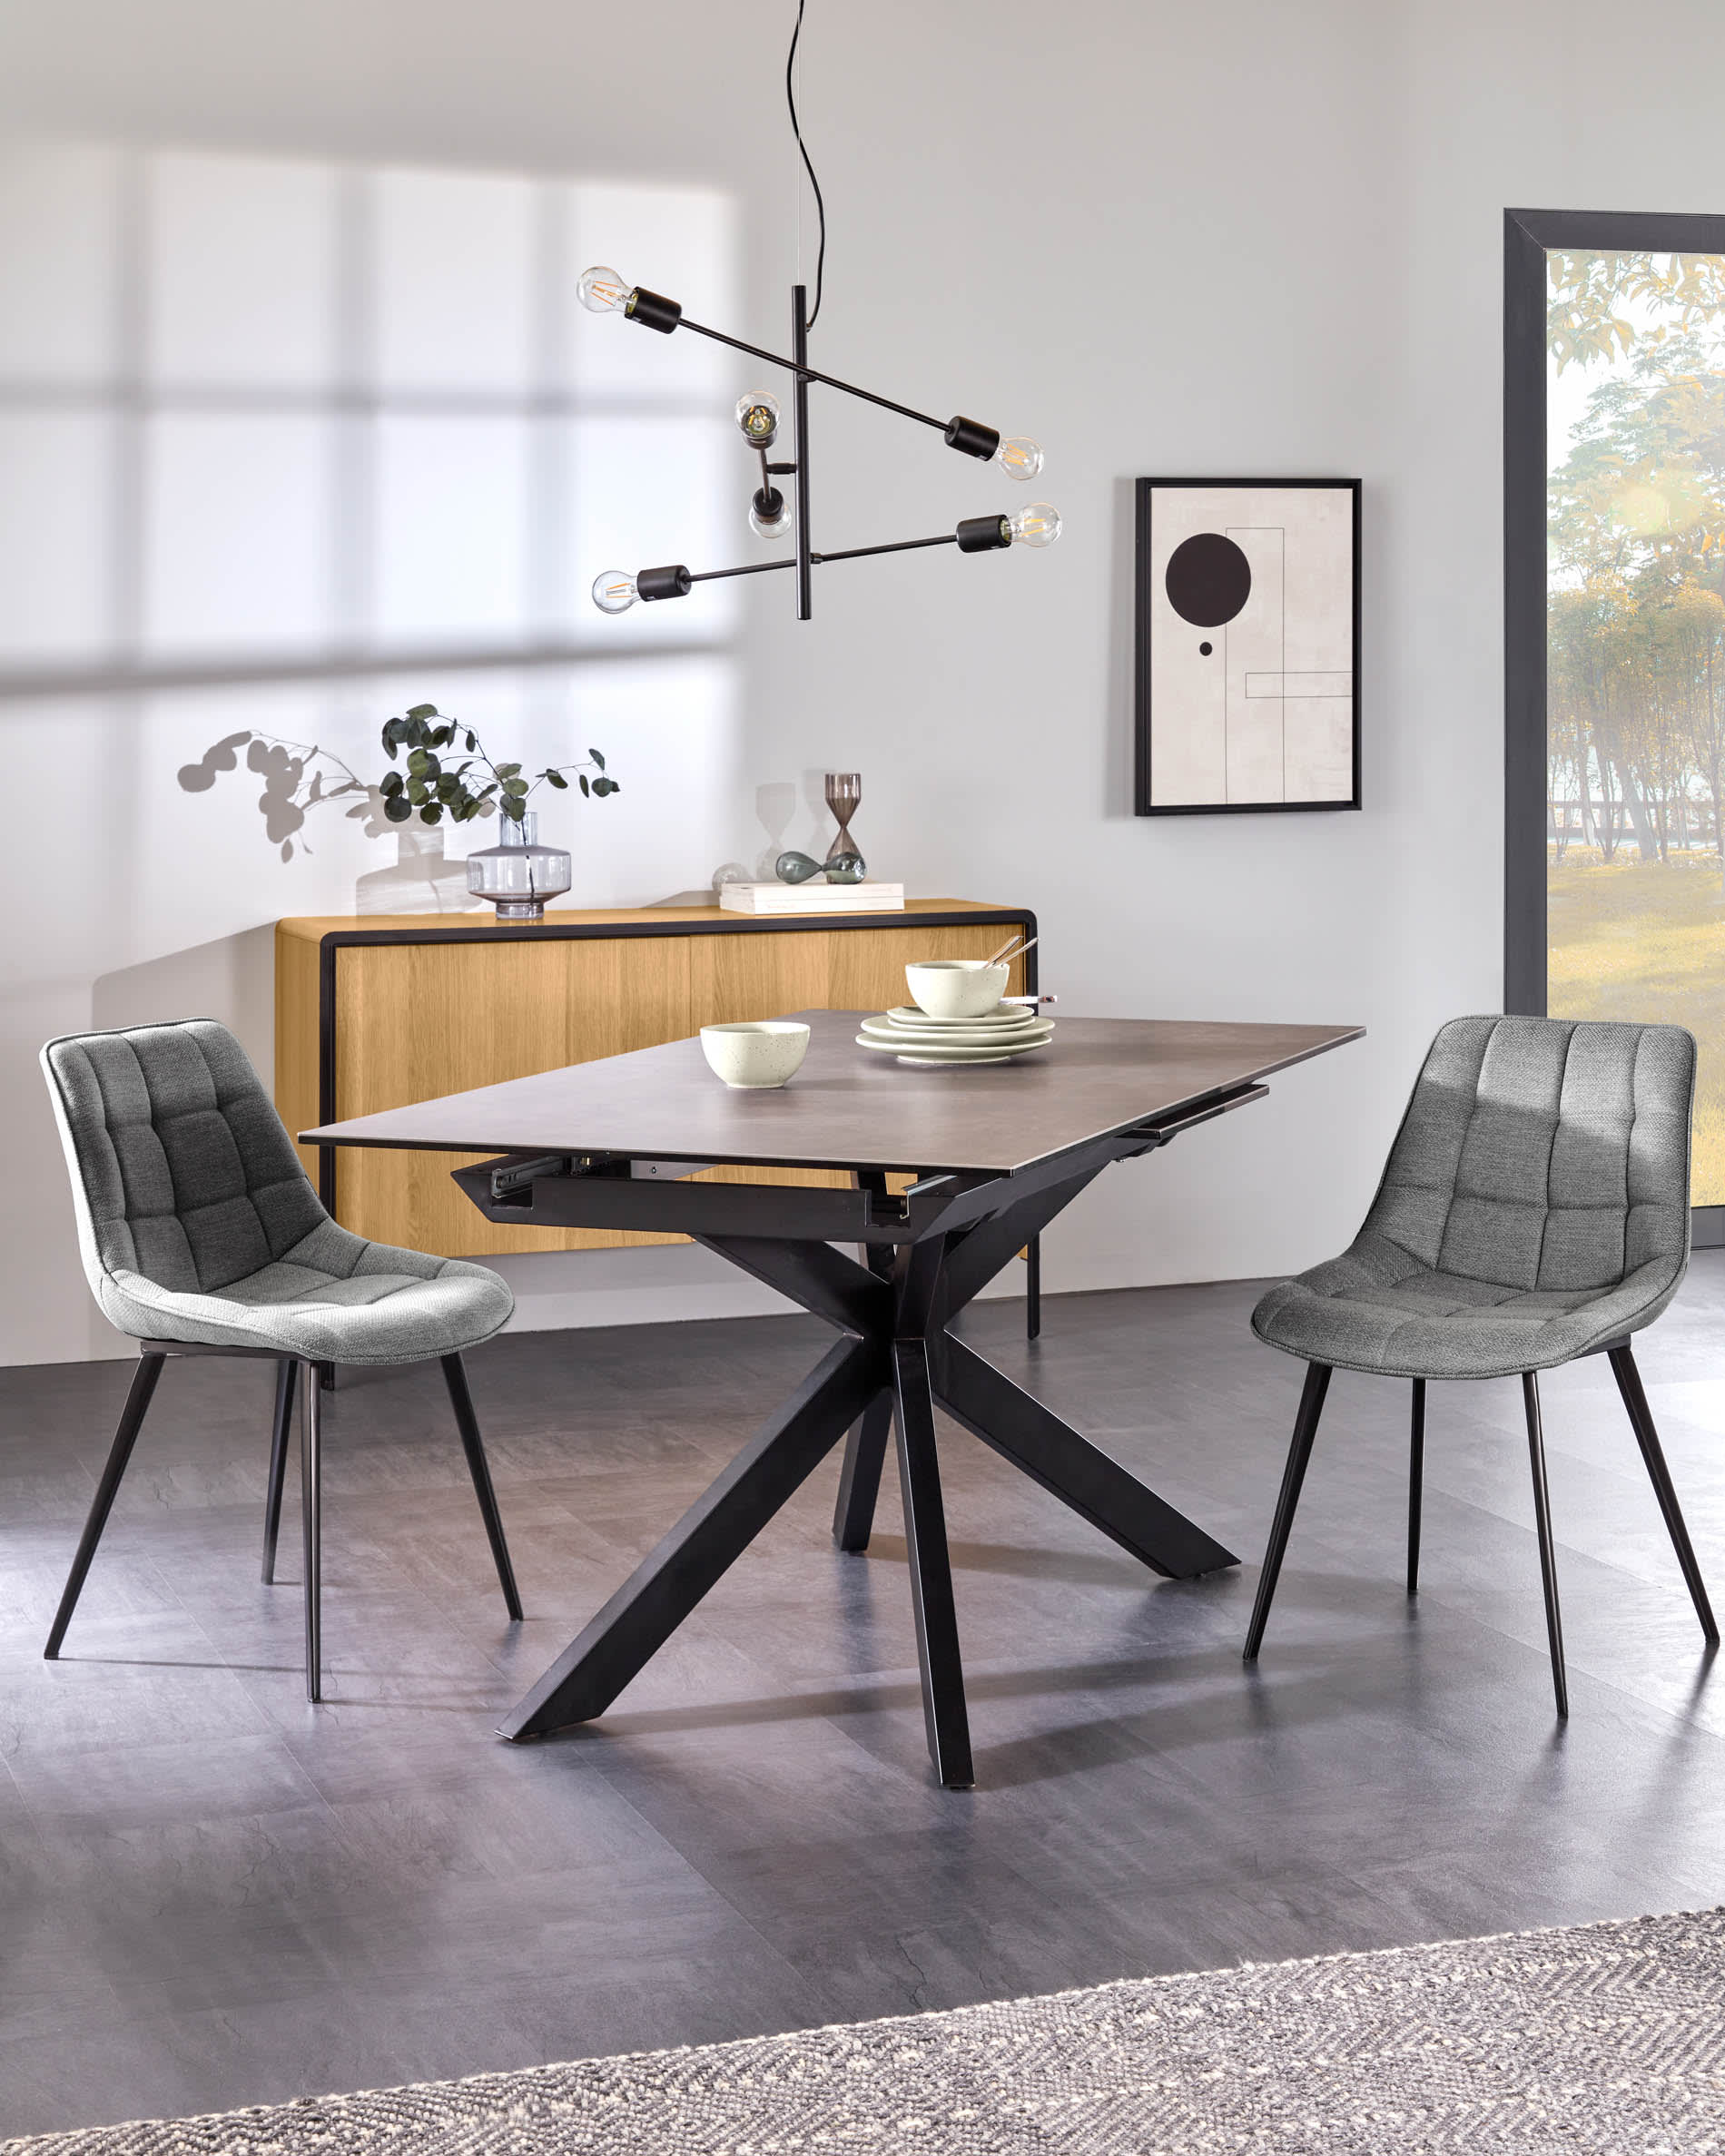 Cojín de silla Sania beige rectangular 48 x 46 cm de tela acrílica desenfundable para uso interior y exterior Kave Home 